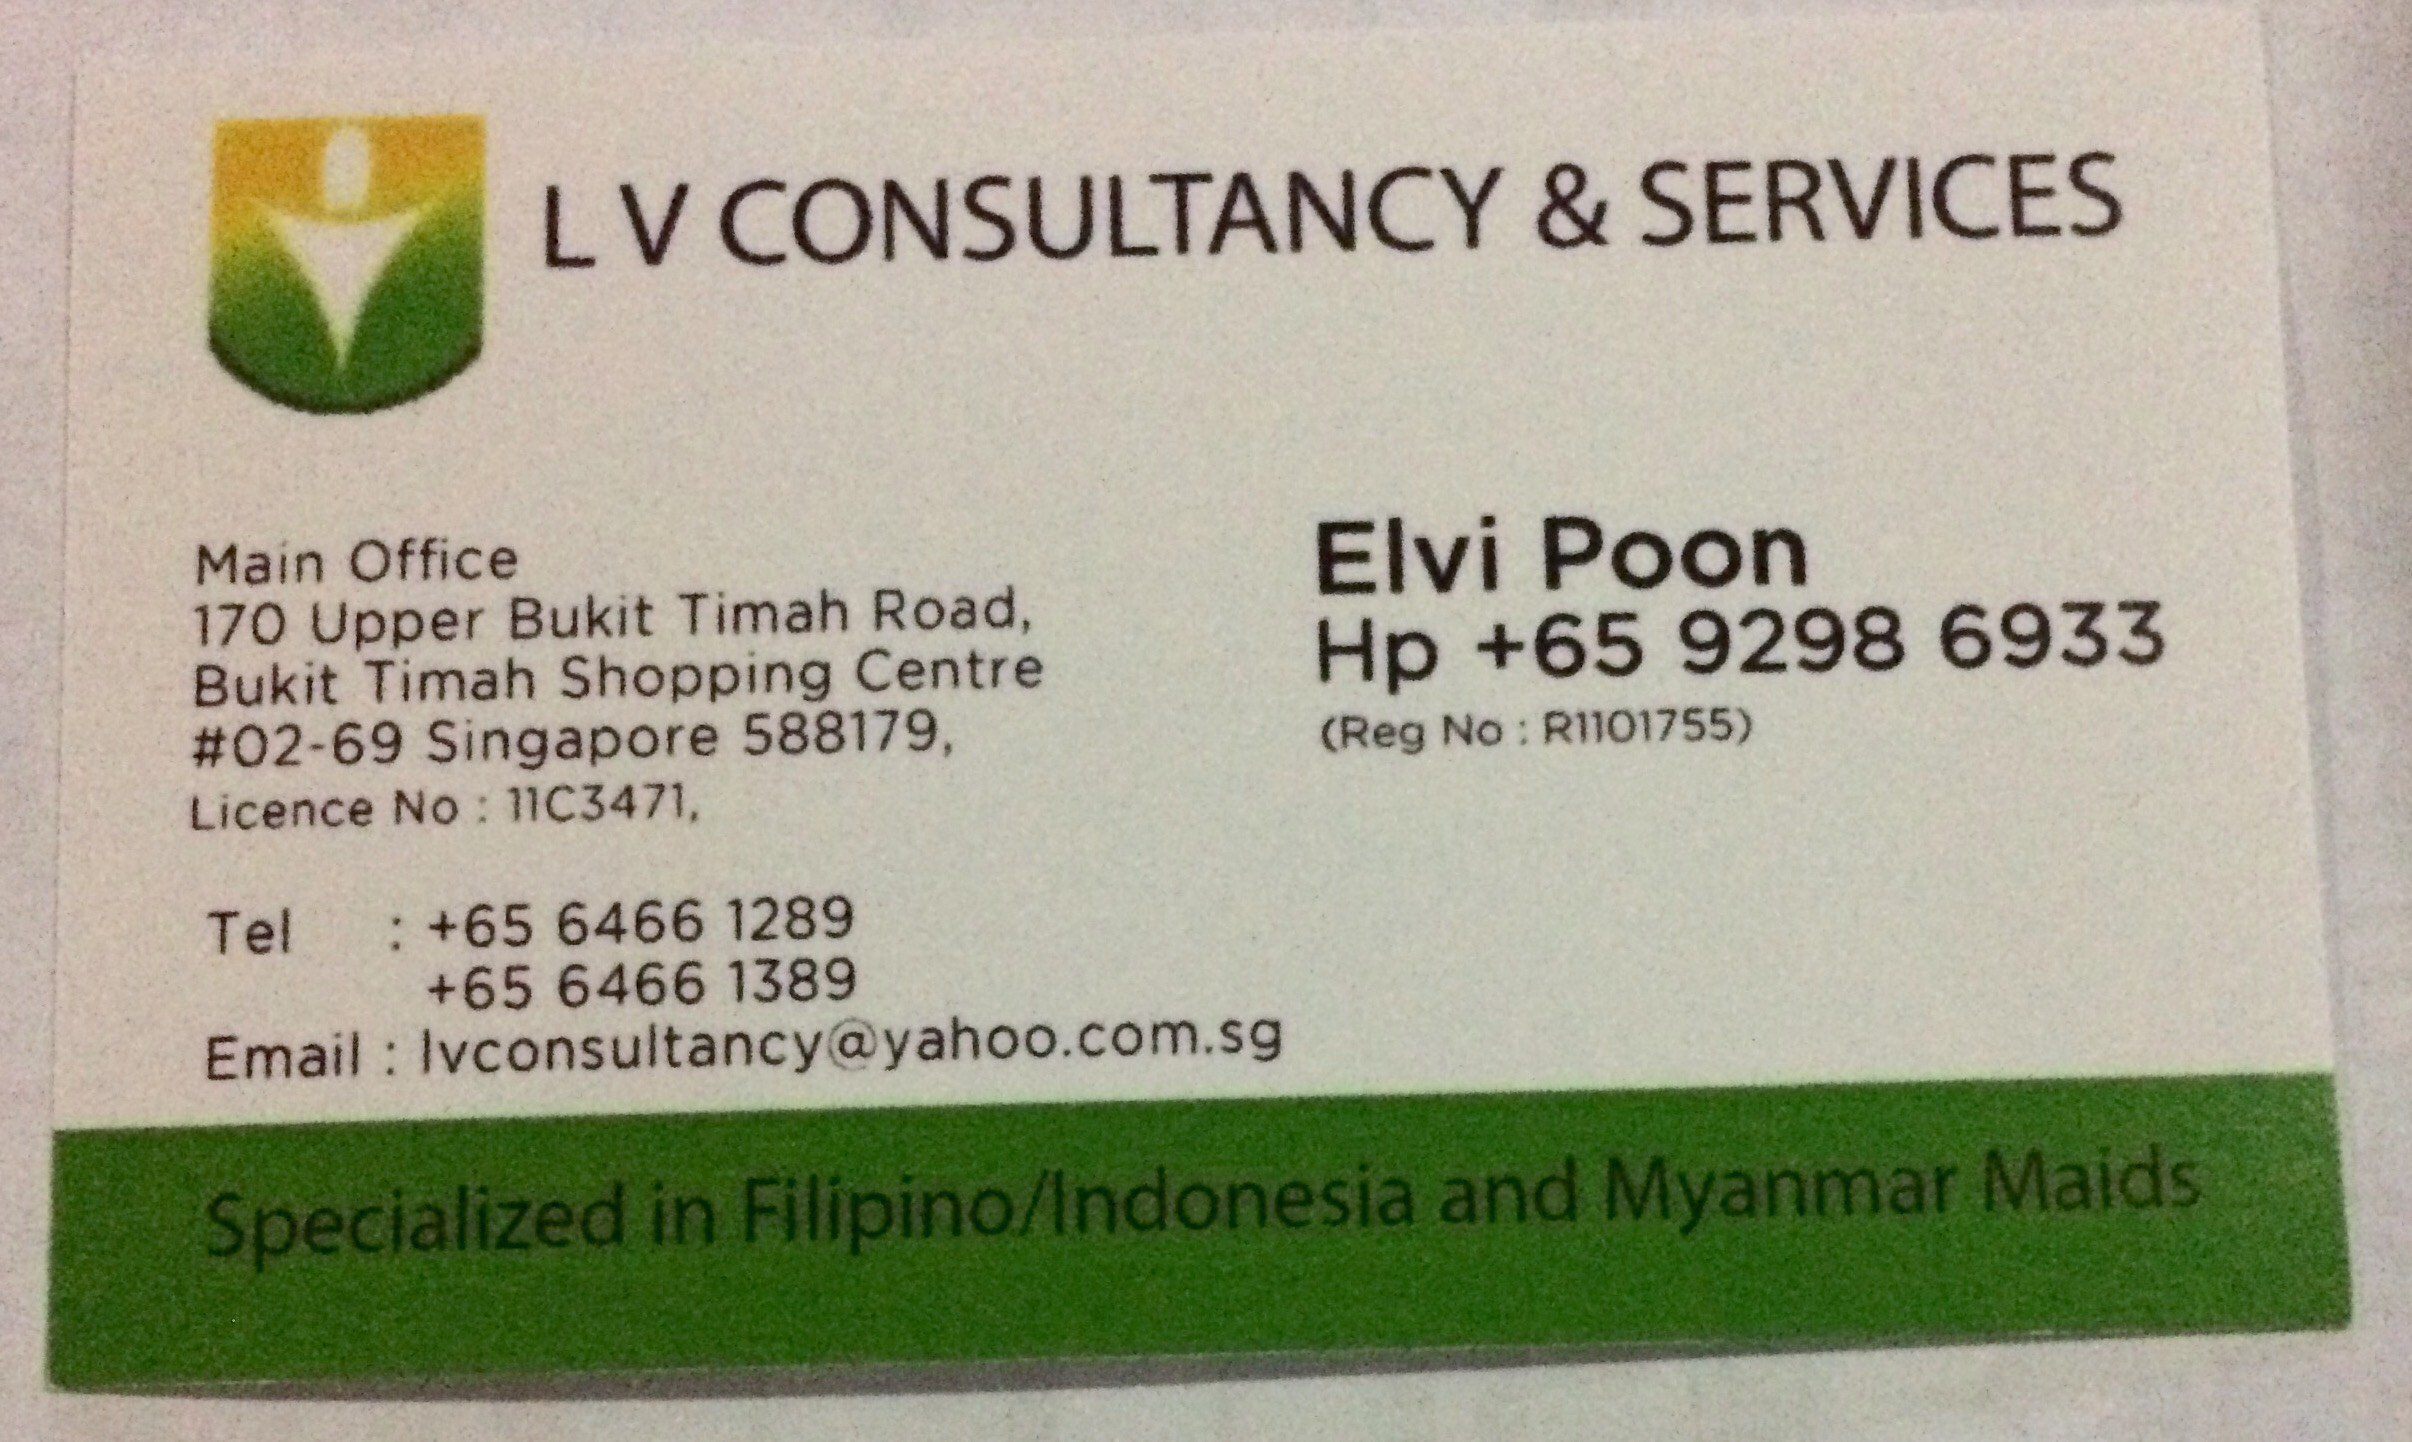 L V Consultancy & Services